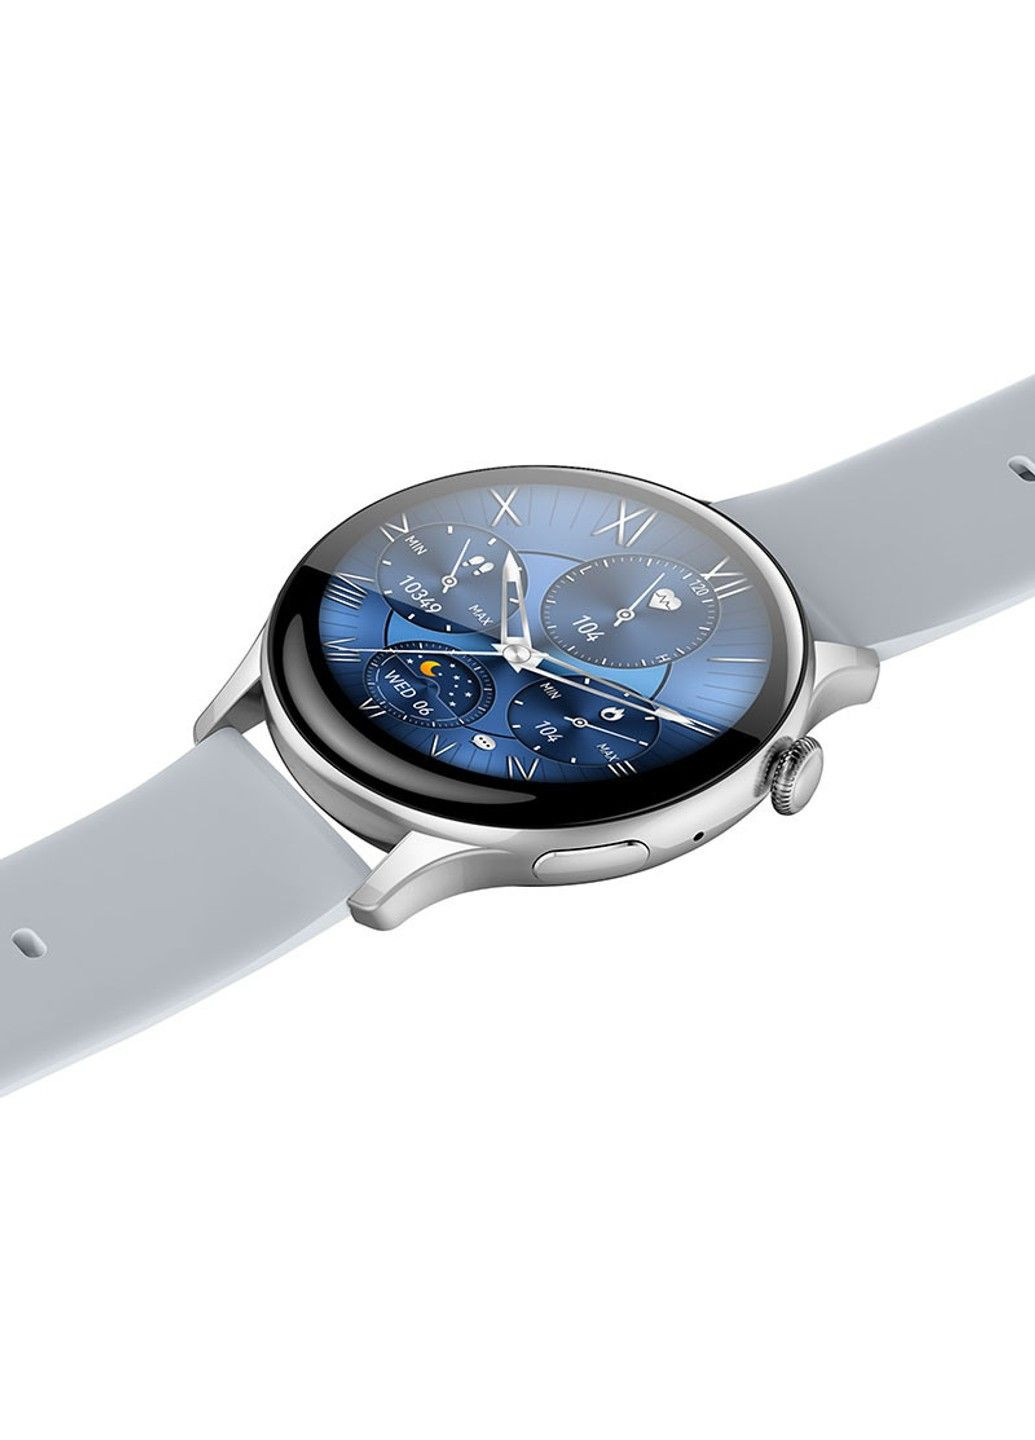 Смарт-часы Smart Watch Y10 Pro Amoled Smart Sports (call version) Hoco (291879833)